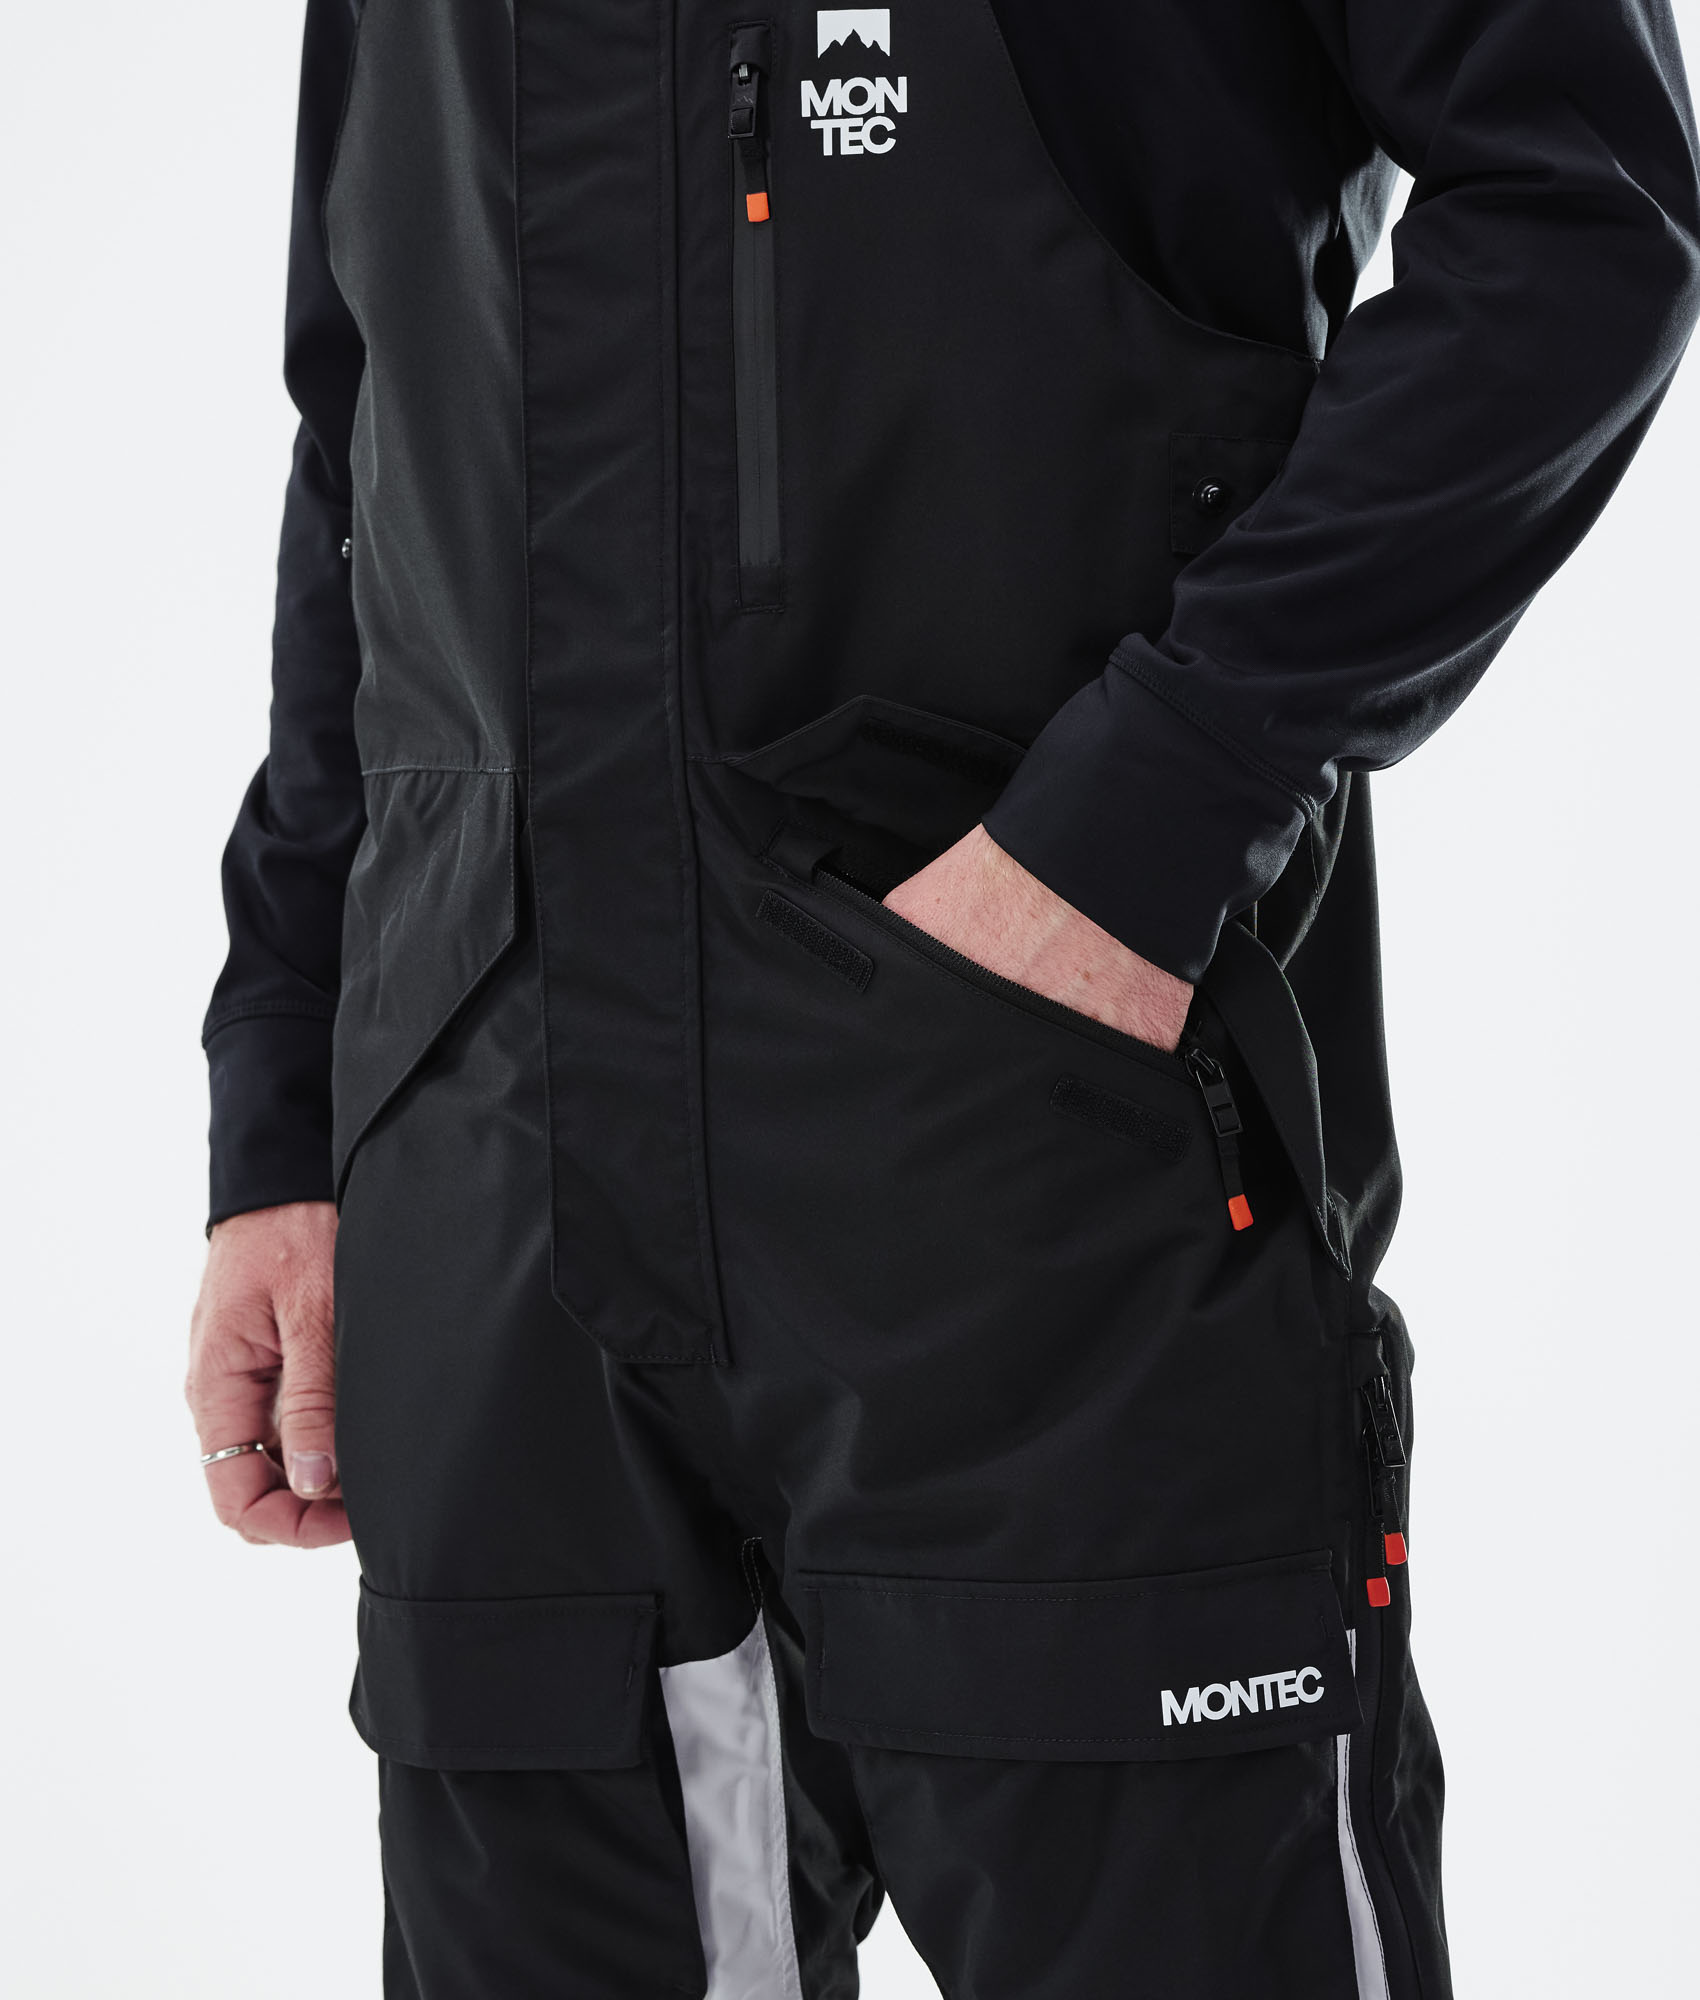 Montec Fawk 2021 Men's Ski Pants Black/Light Grey/Burgundy